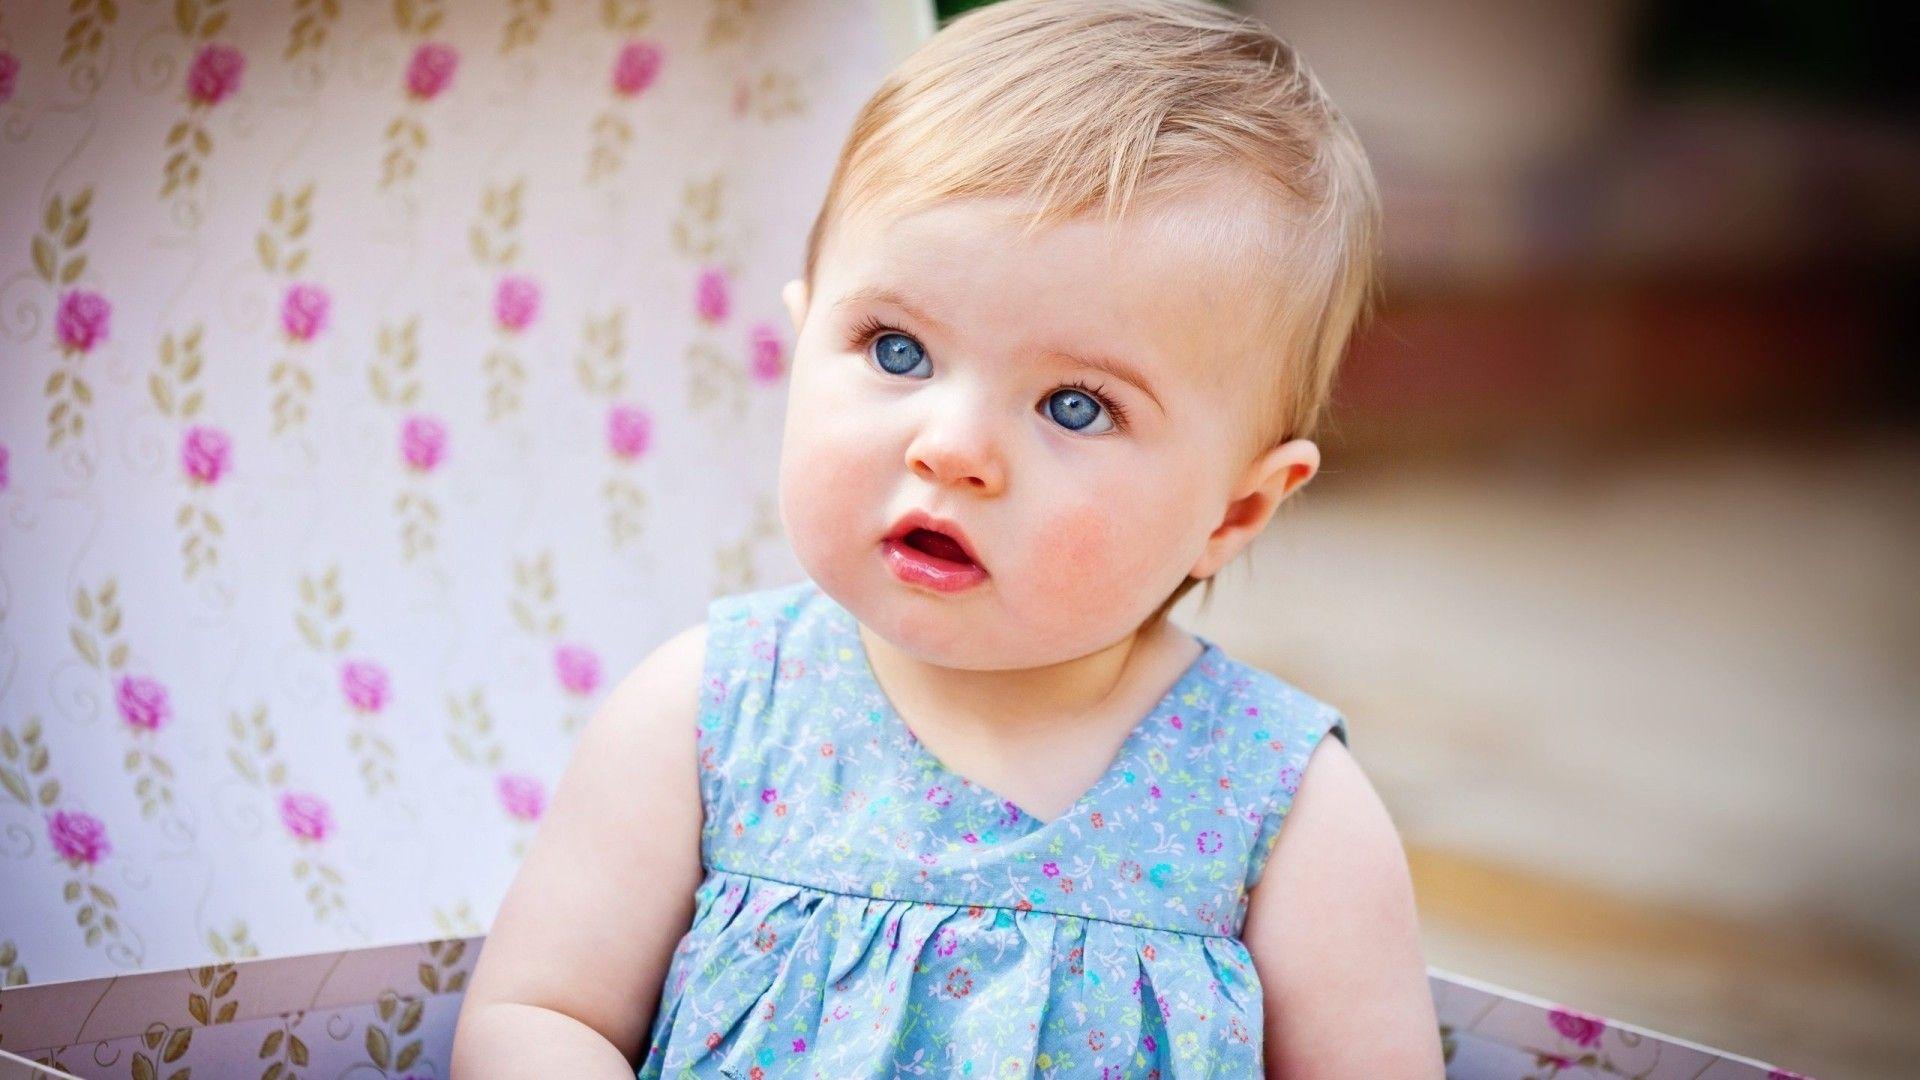 Cute Baby HD Wallpaper 1080p Pics For Desktop Most Girl